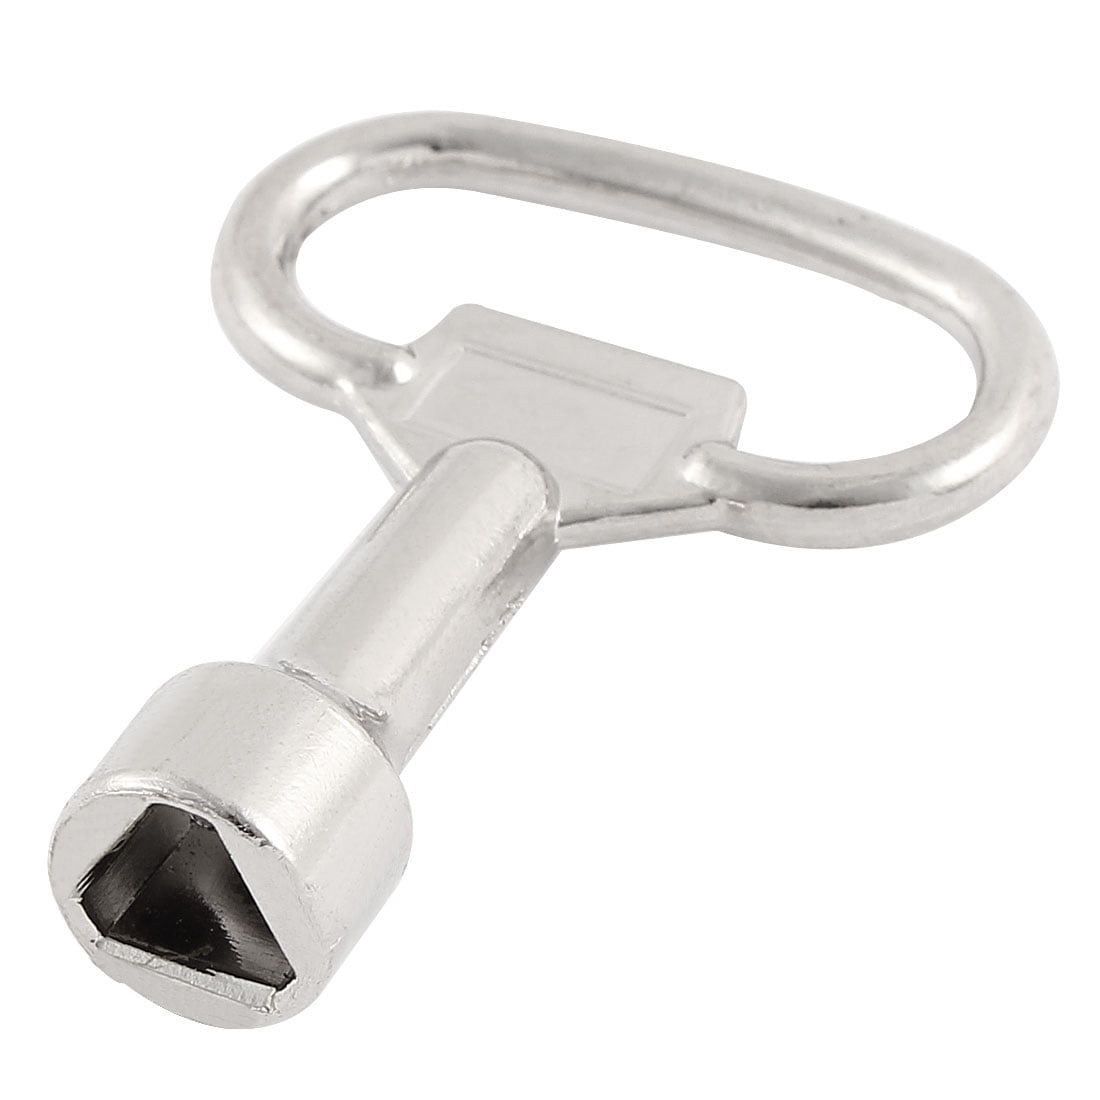 LOT OF 2 Steel Triangle Socket Spanner Key for 8 mm Panel Lock Mesan # 267.38 